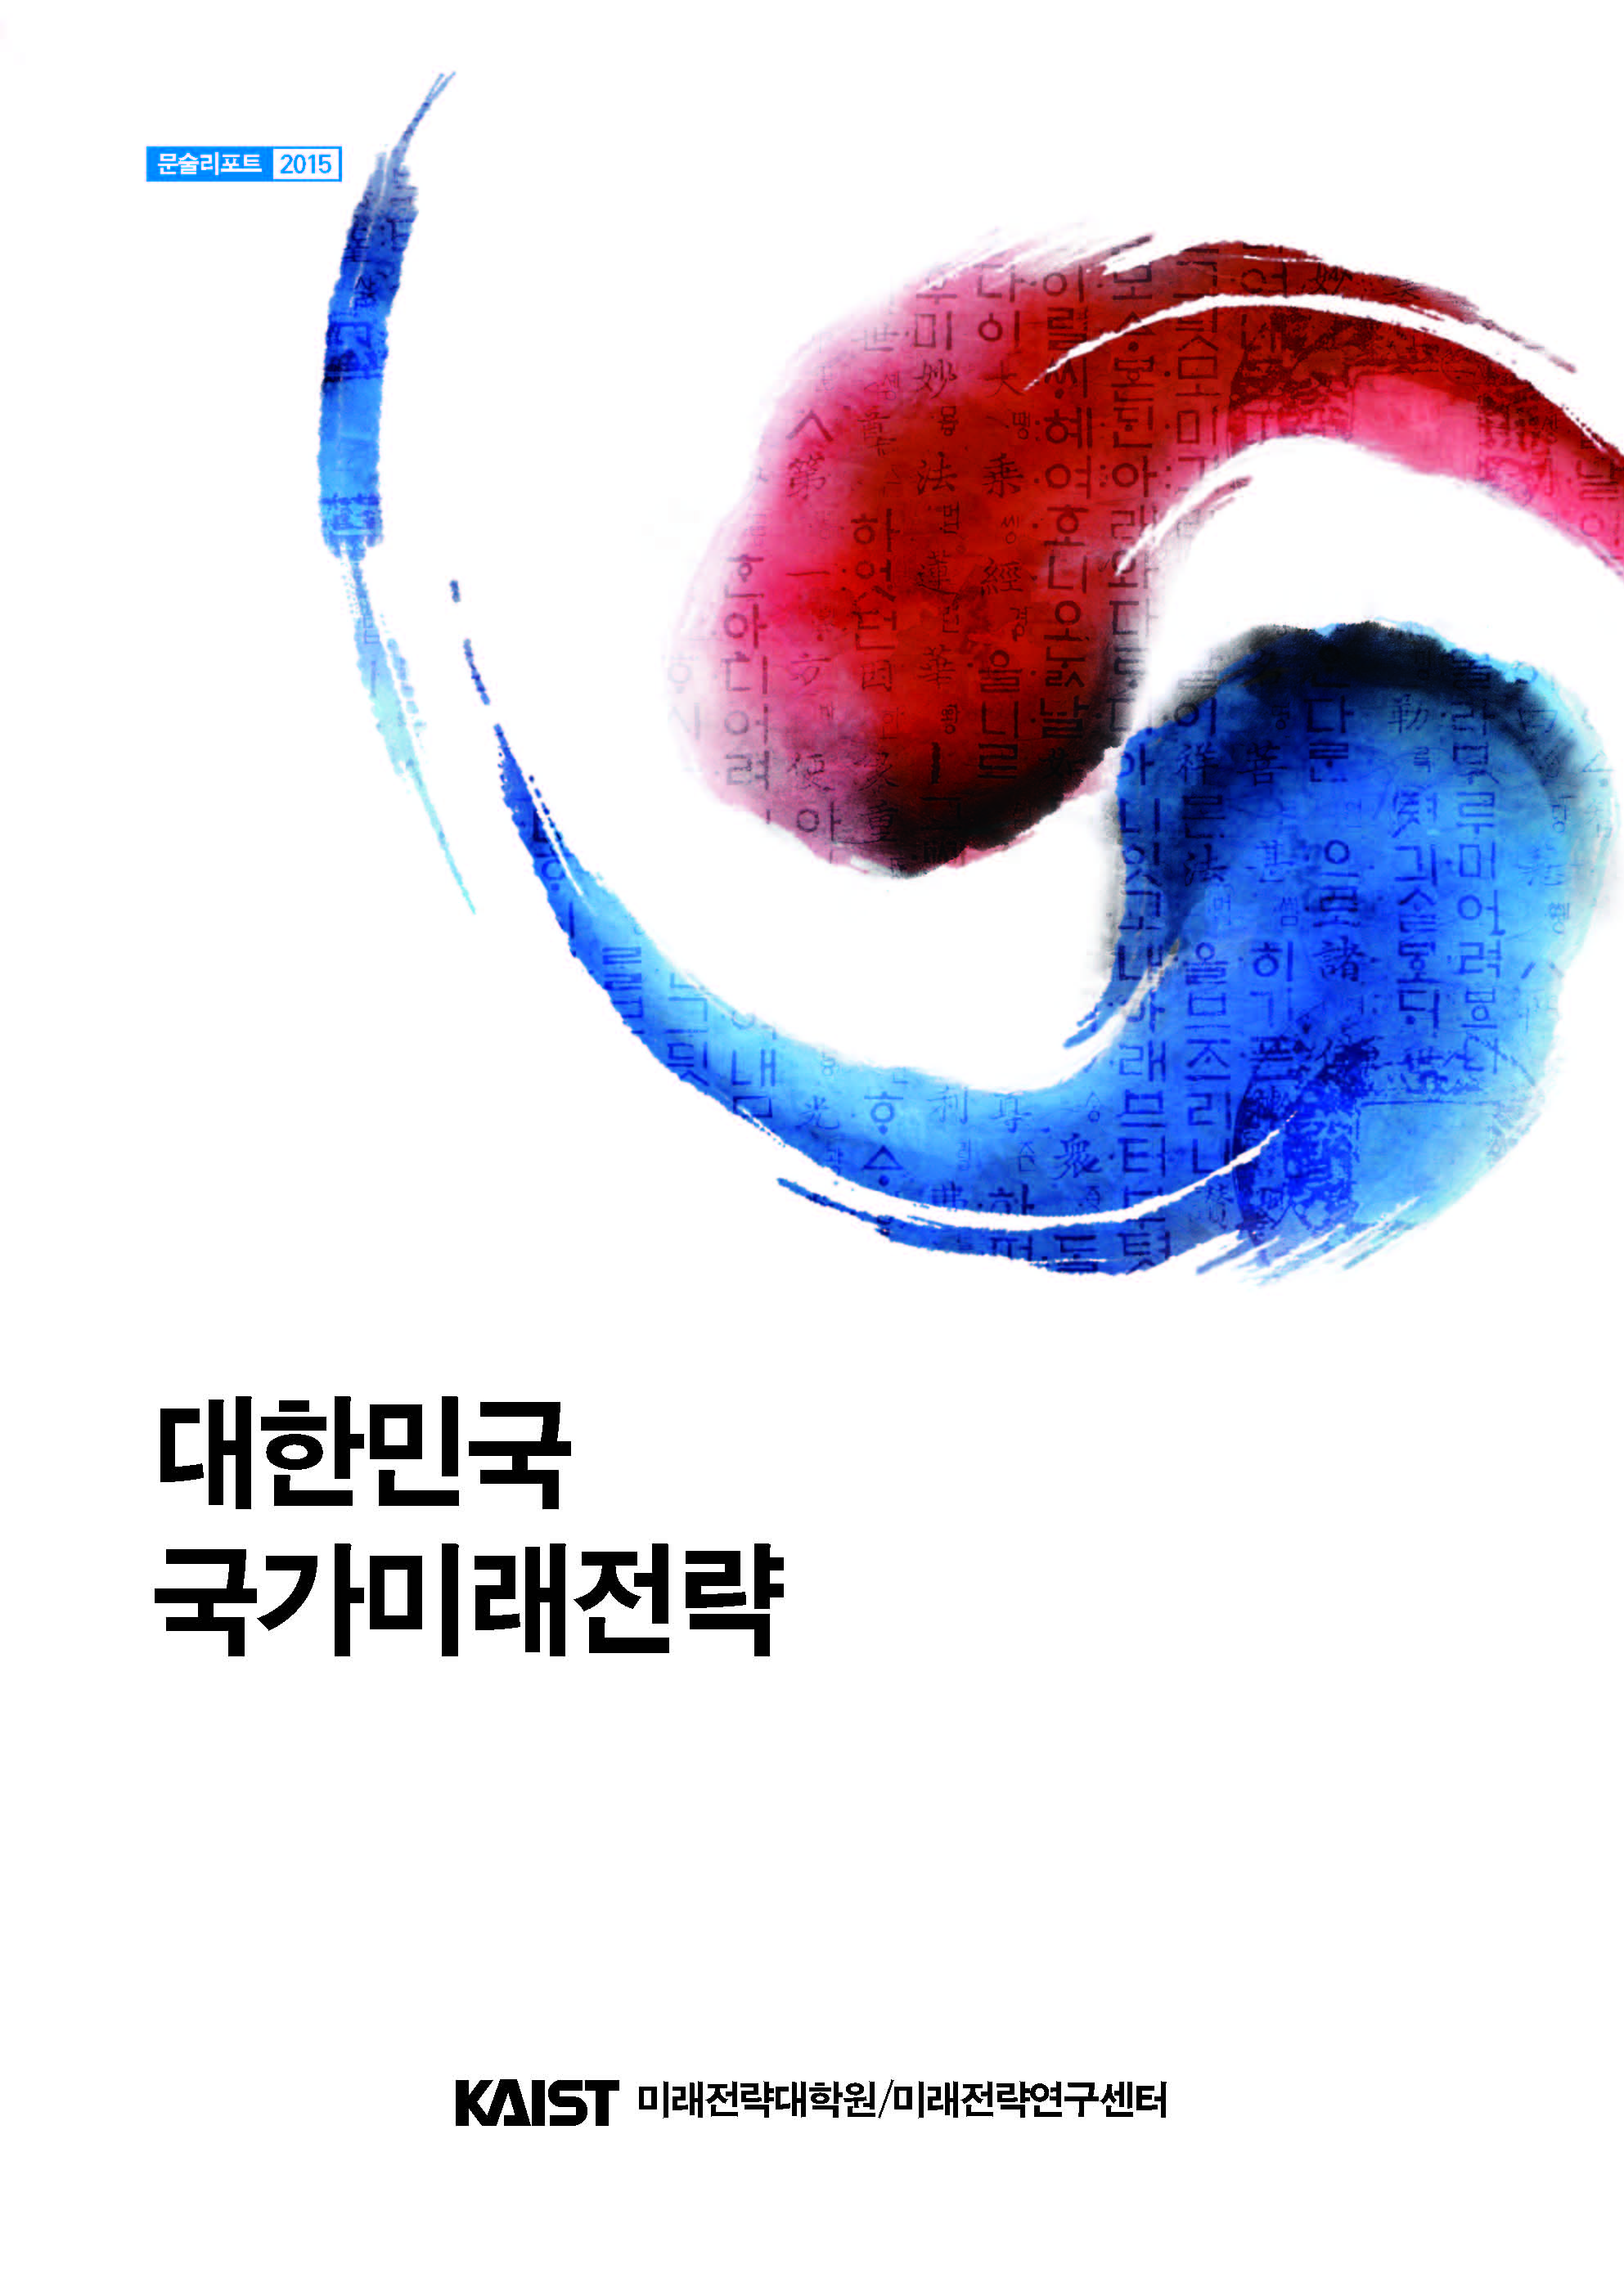 Korea National Future Strategy 2015